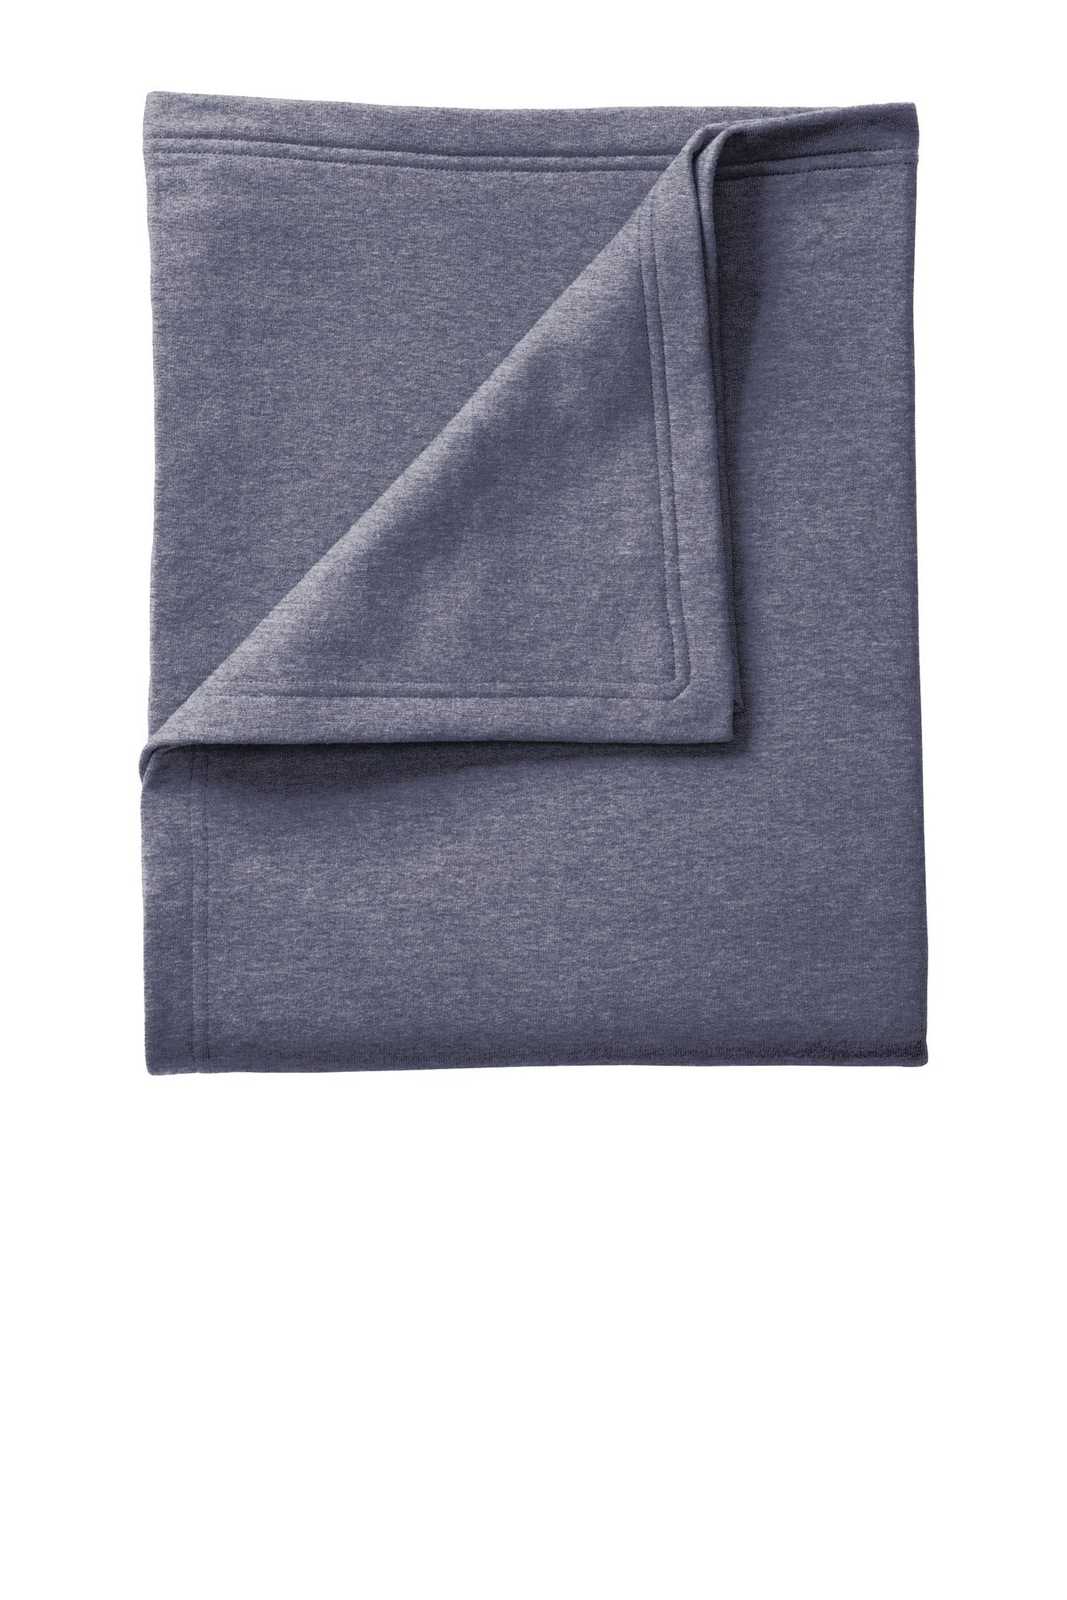 Port & Company BP78 Core Fleece Sweatshirt Blanket - Heather Navy - HIT a Double - 1